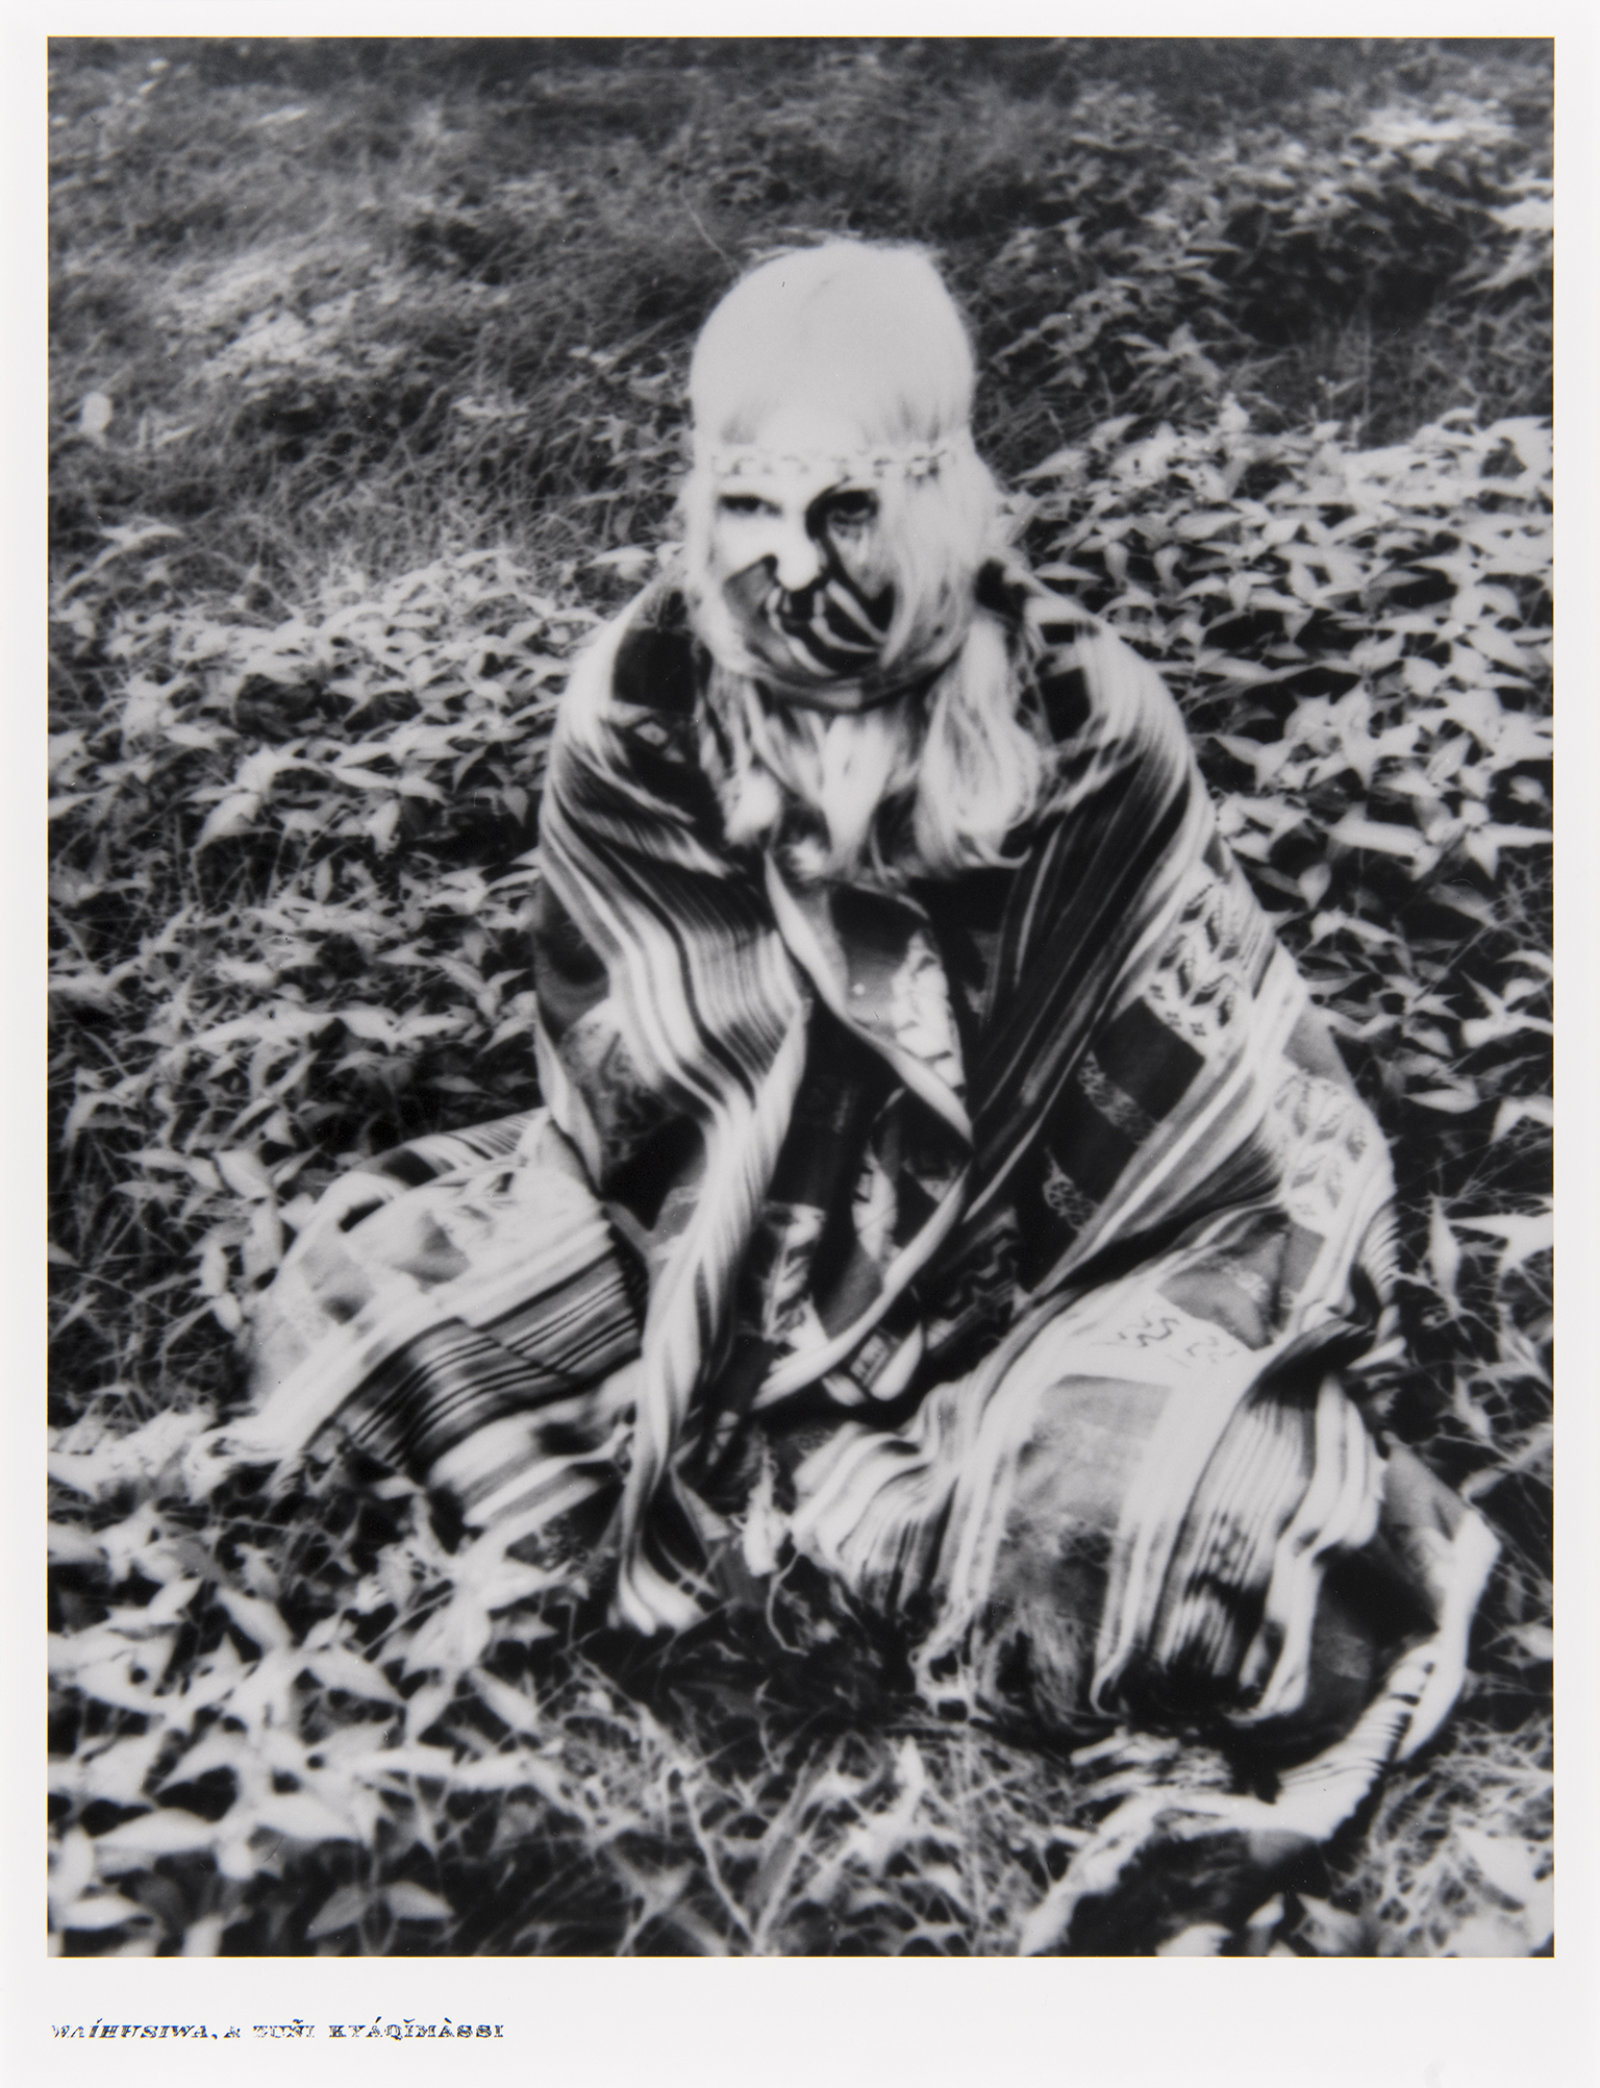 Liz Magor, Waihusiwa A Tuni Kyaquimassi from Field Work, 1989, selenium toned silver gelatin print, 20 x 16 in. (51 x 41 cm)